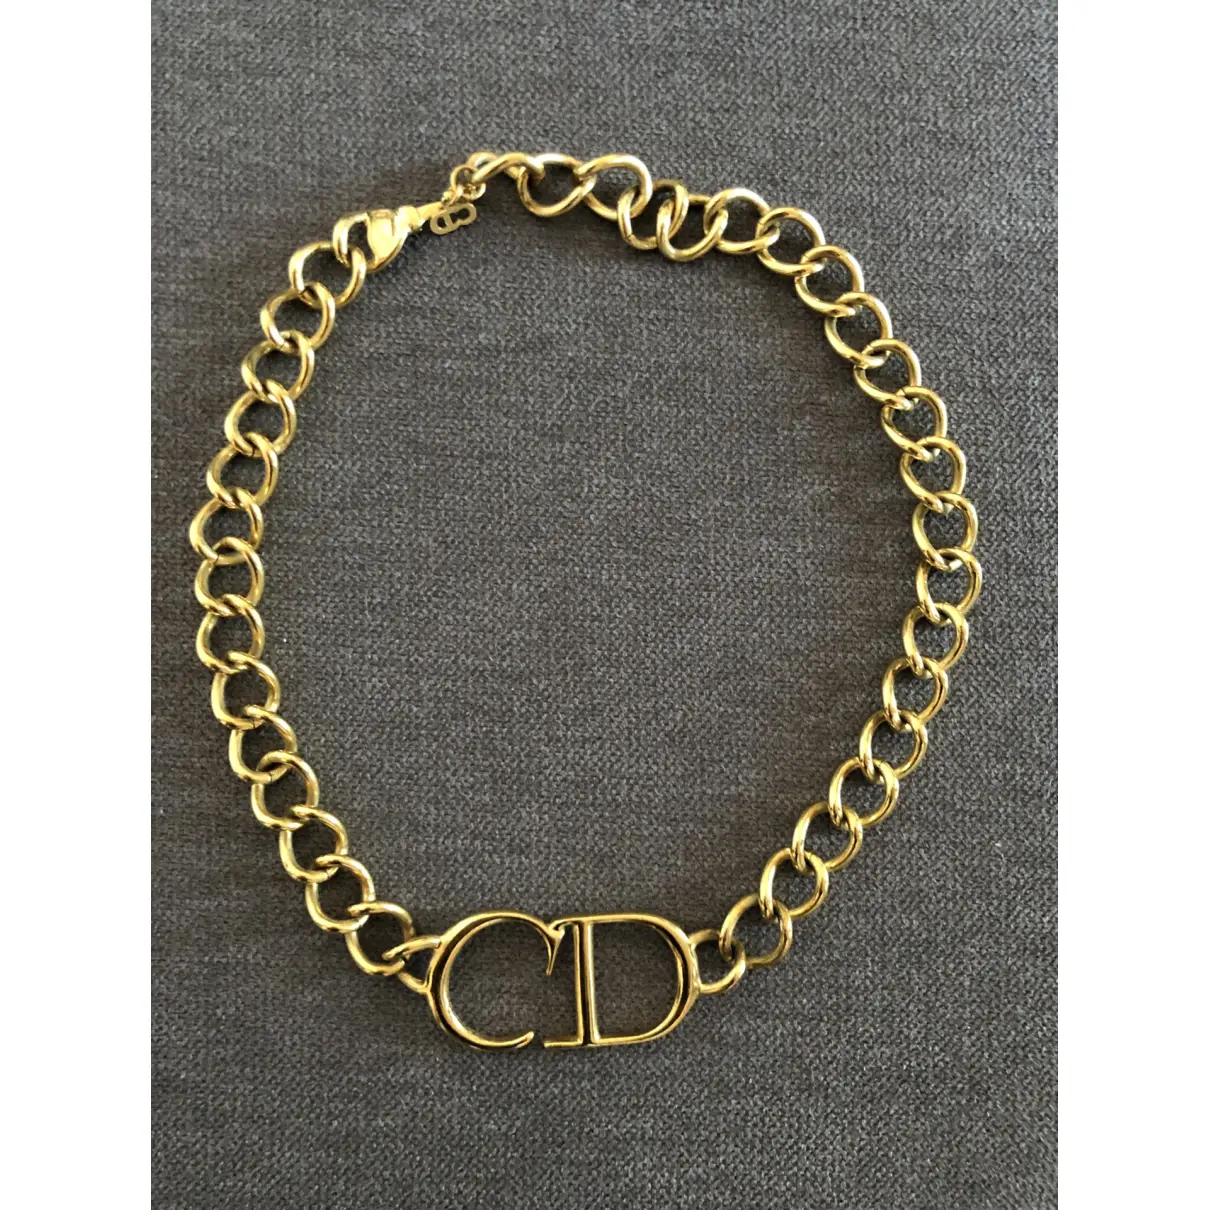 Buy Dior CD Navy necklace online